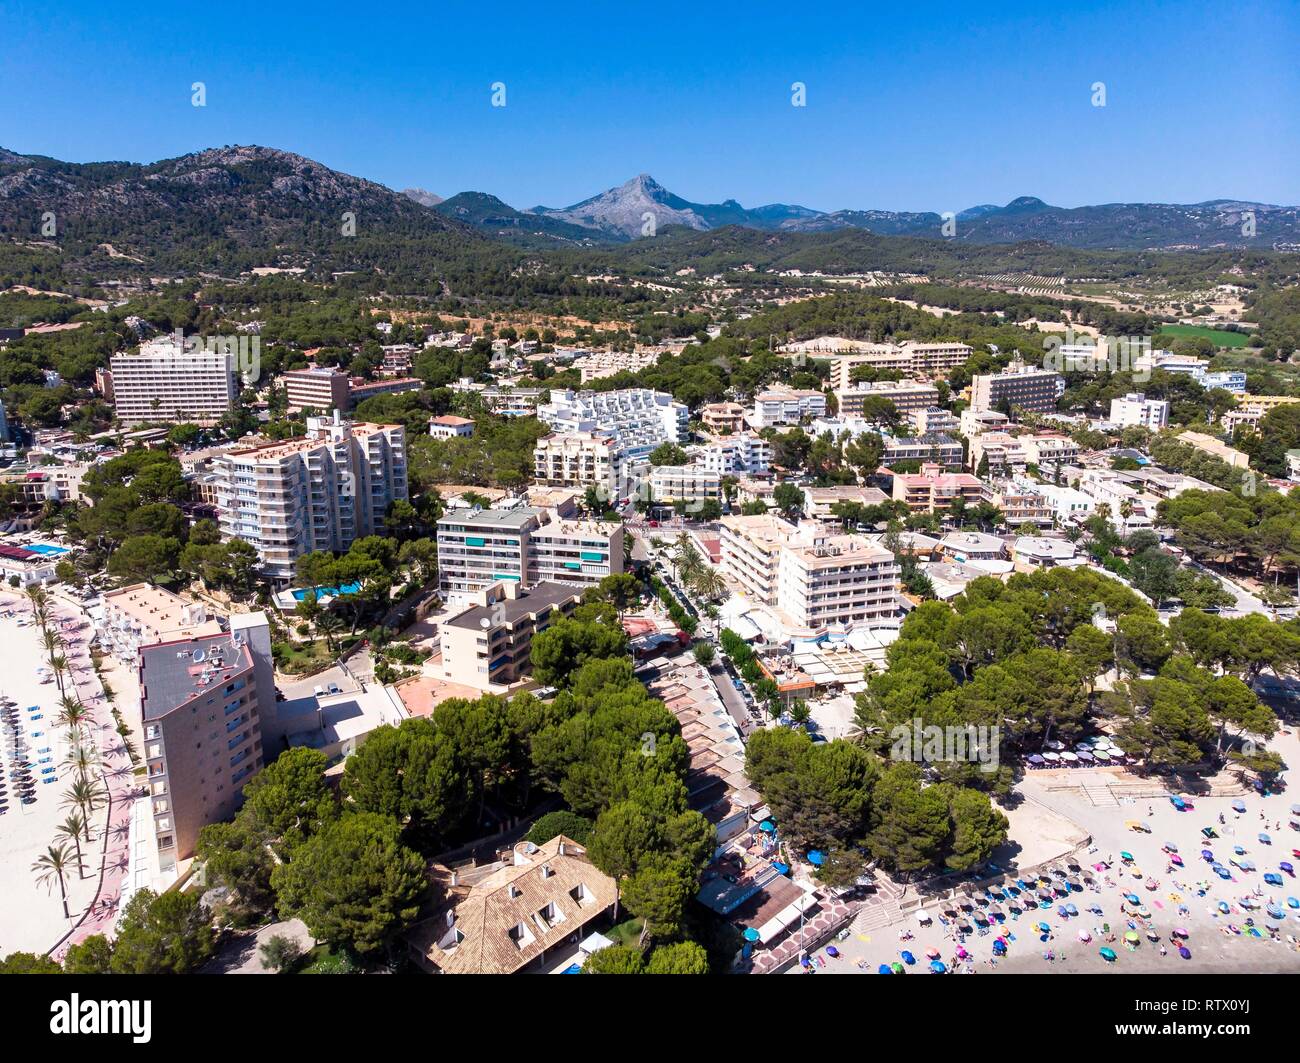 Aerial view, view of Peguera with hotels and beaches, Costa de la Calma, Caliva region, Majorca, Balearic Islands, Spain Stock Photo